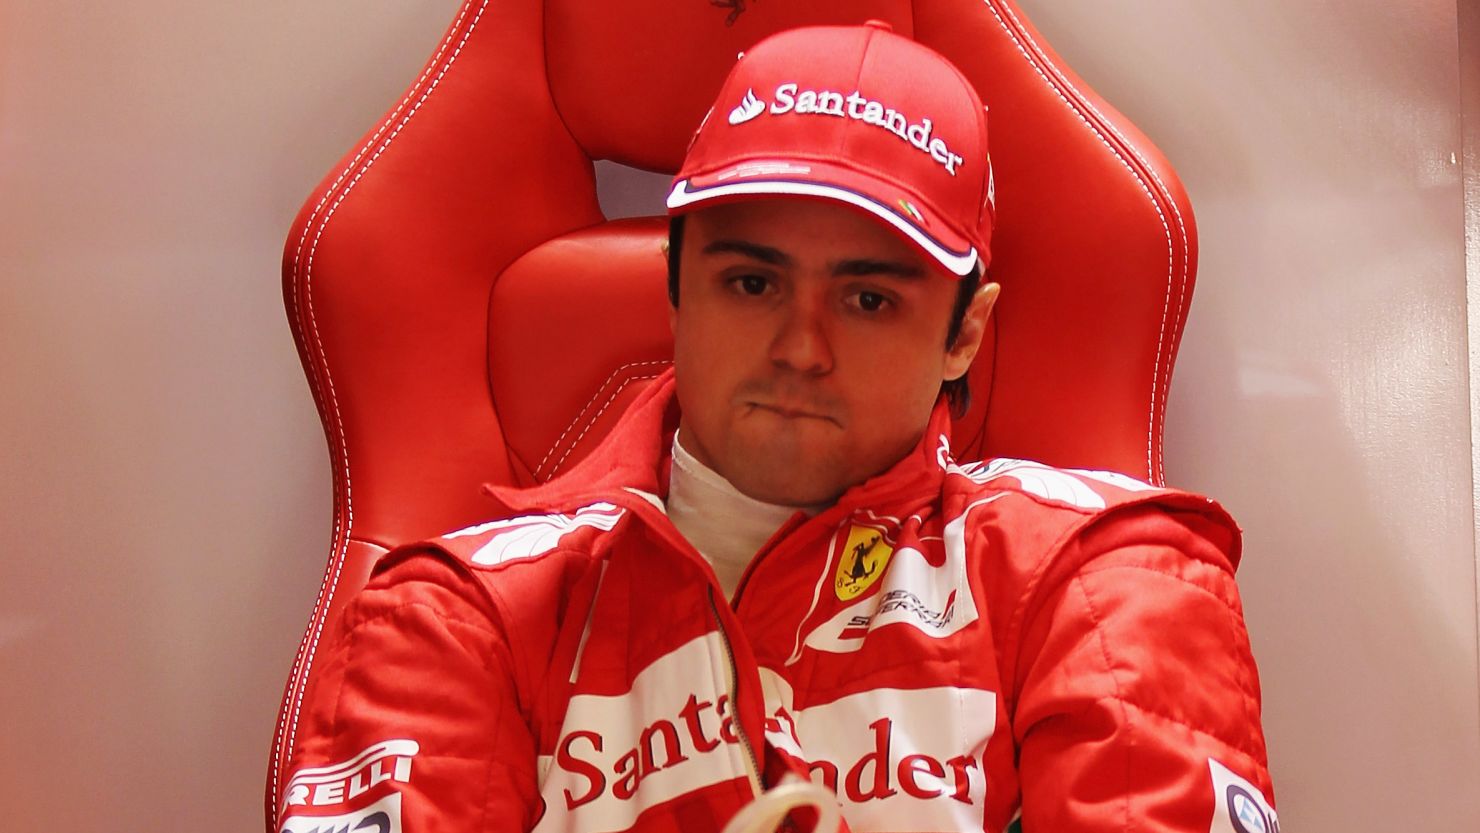 Brazilian Felipe Massa has been driving for Ferrari since 2006, having previously been with Sauber.